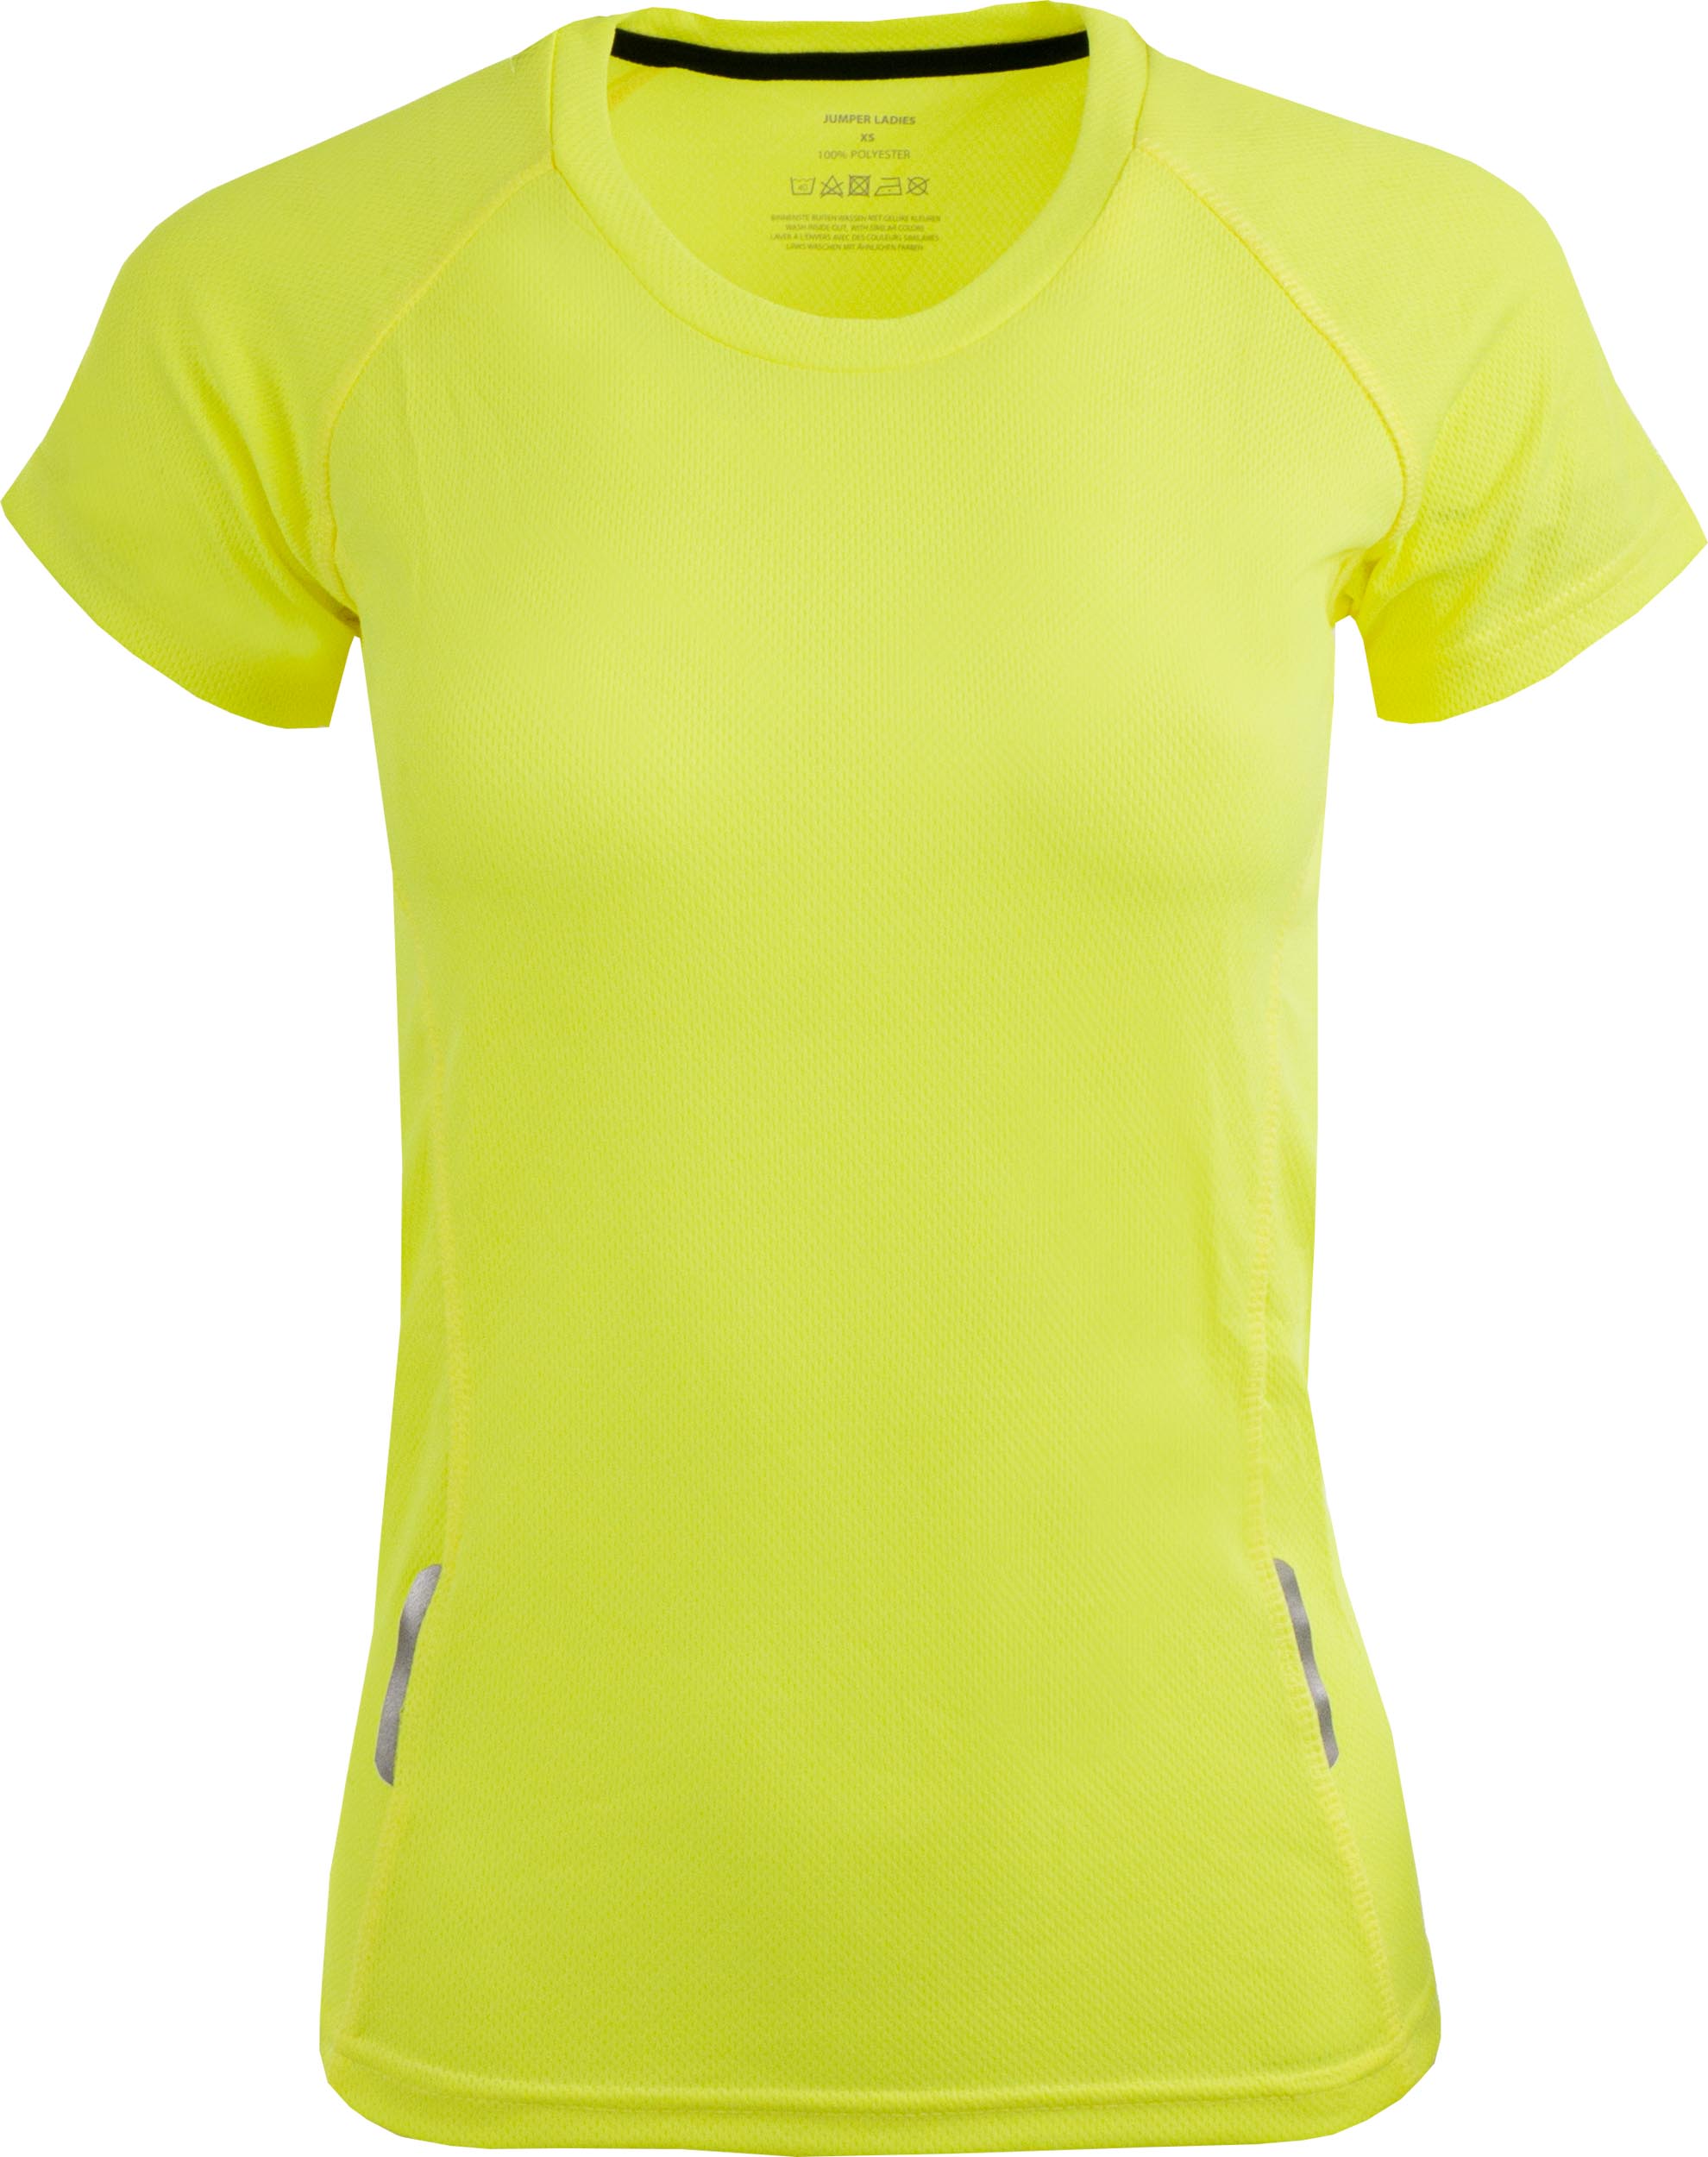 Sportovní triko JUMPER Ladies yellow|XS